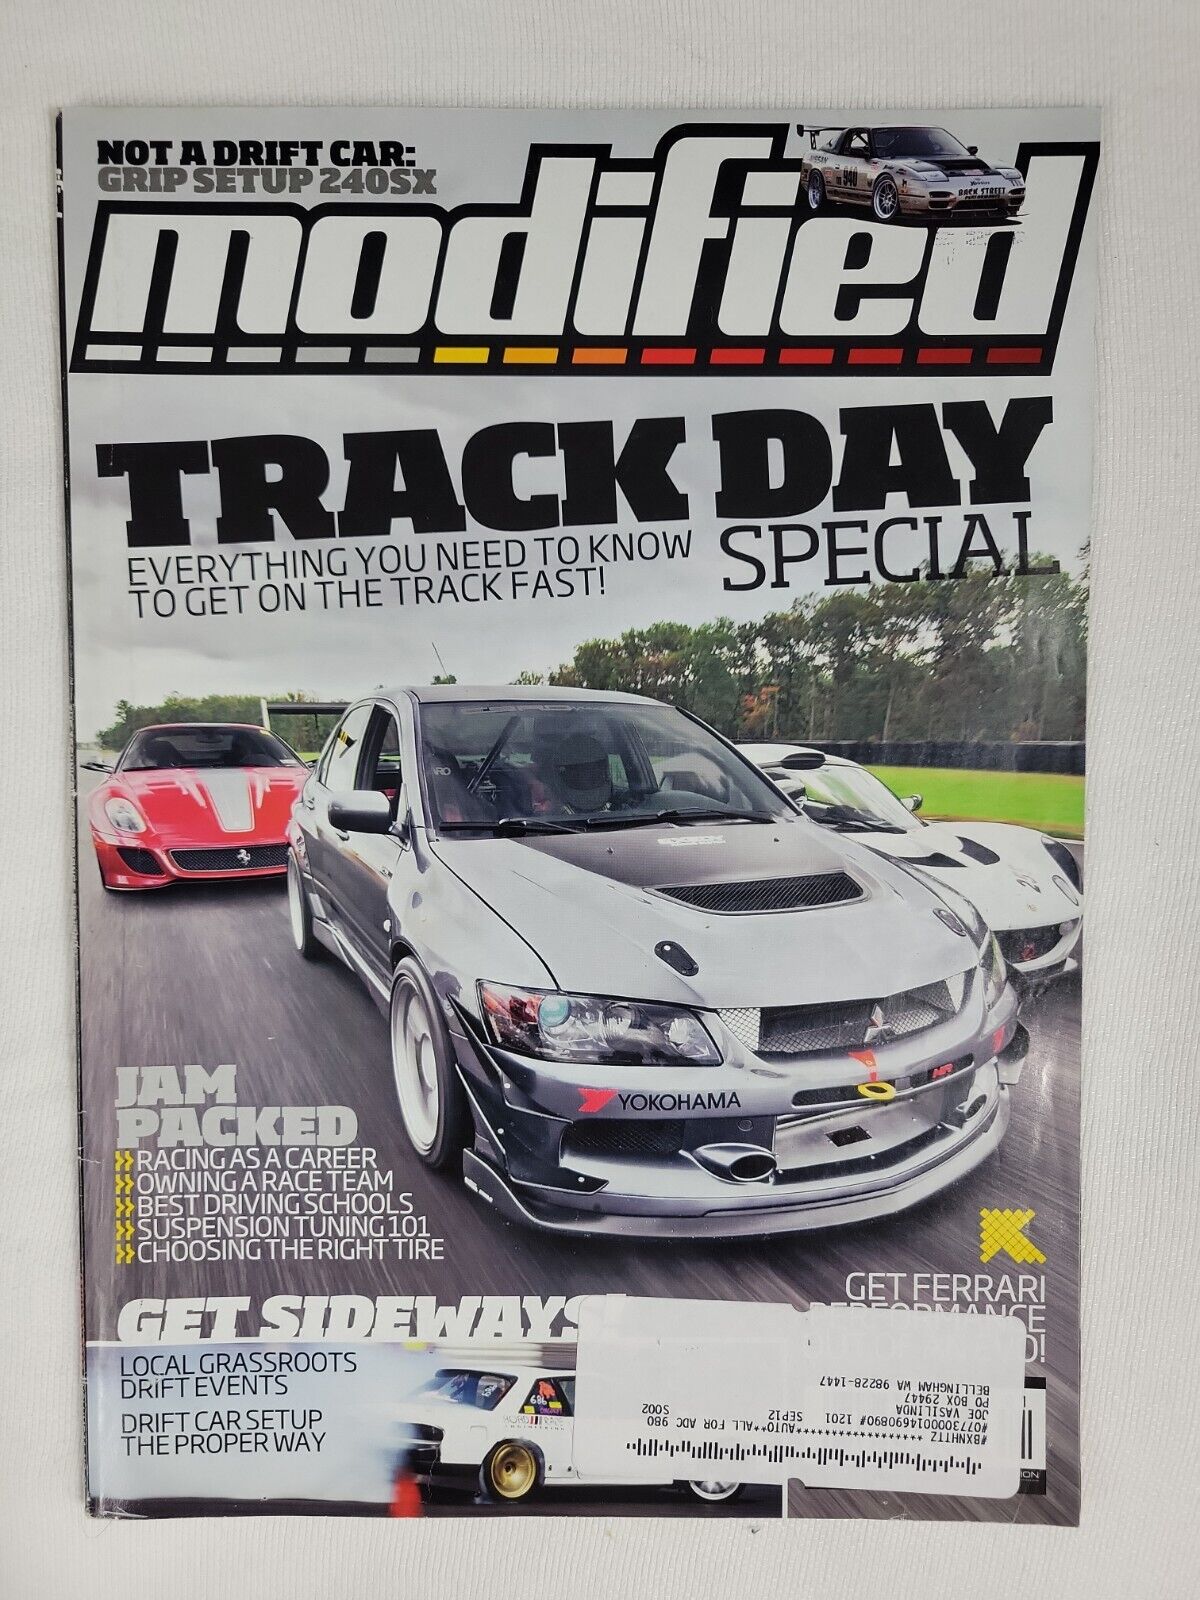 Modified Magazine - January 2012 - 240sx, Evo, Escort